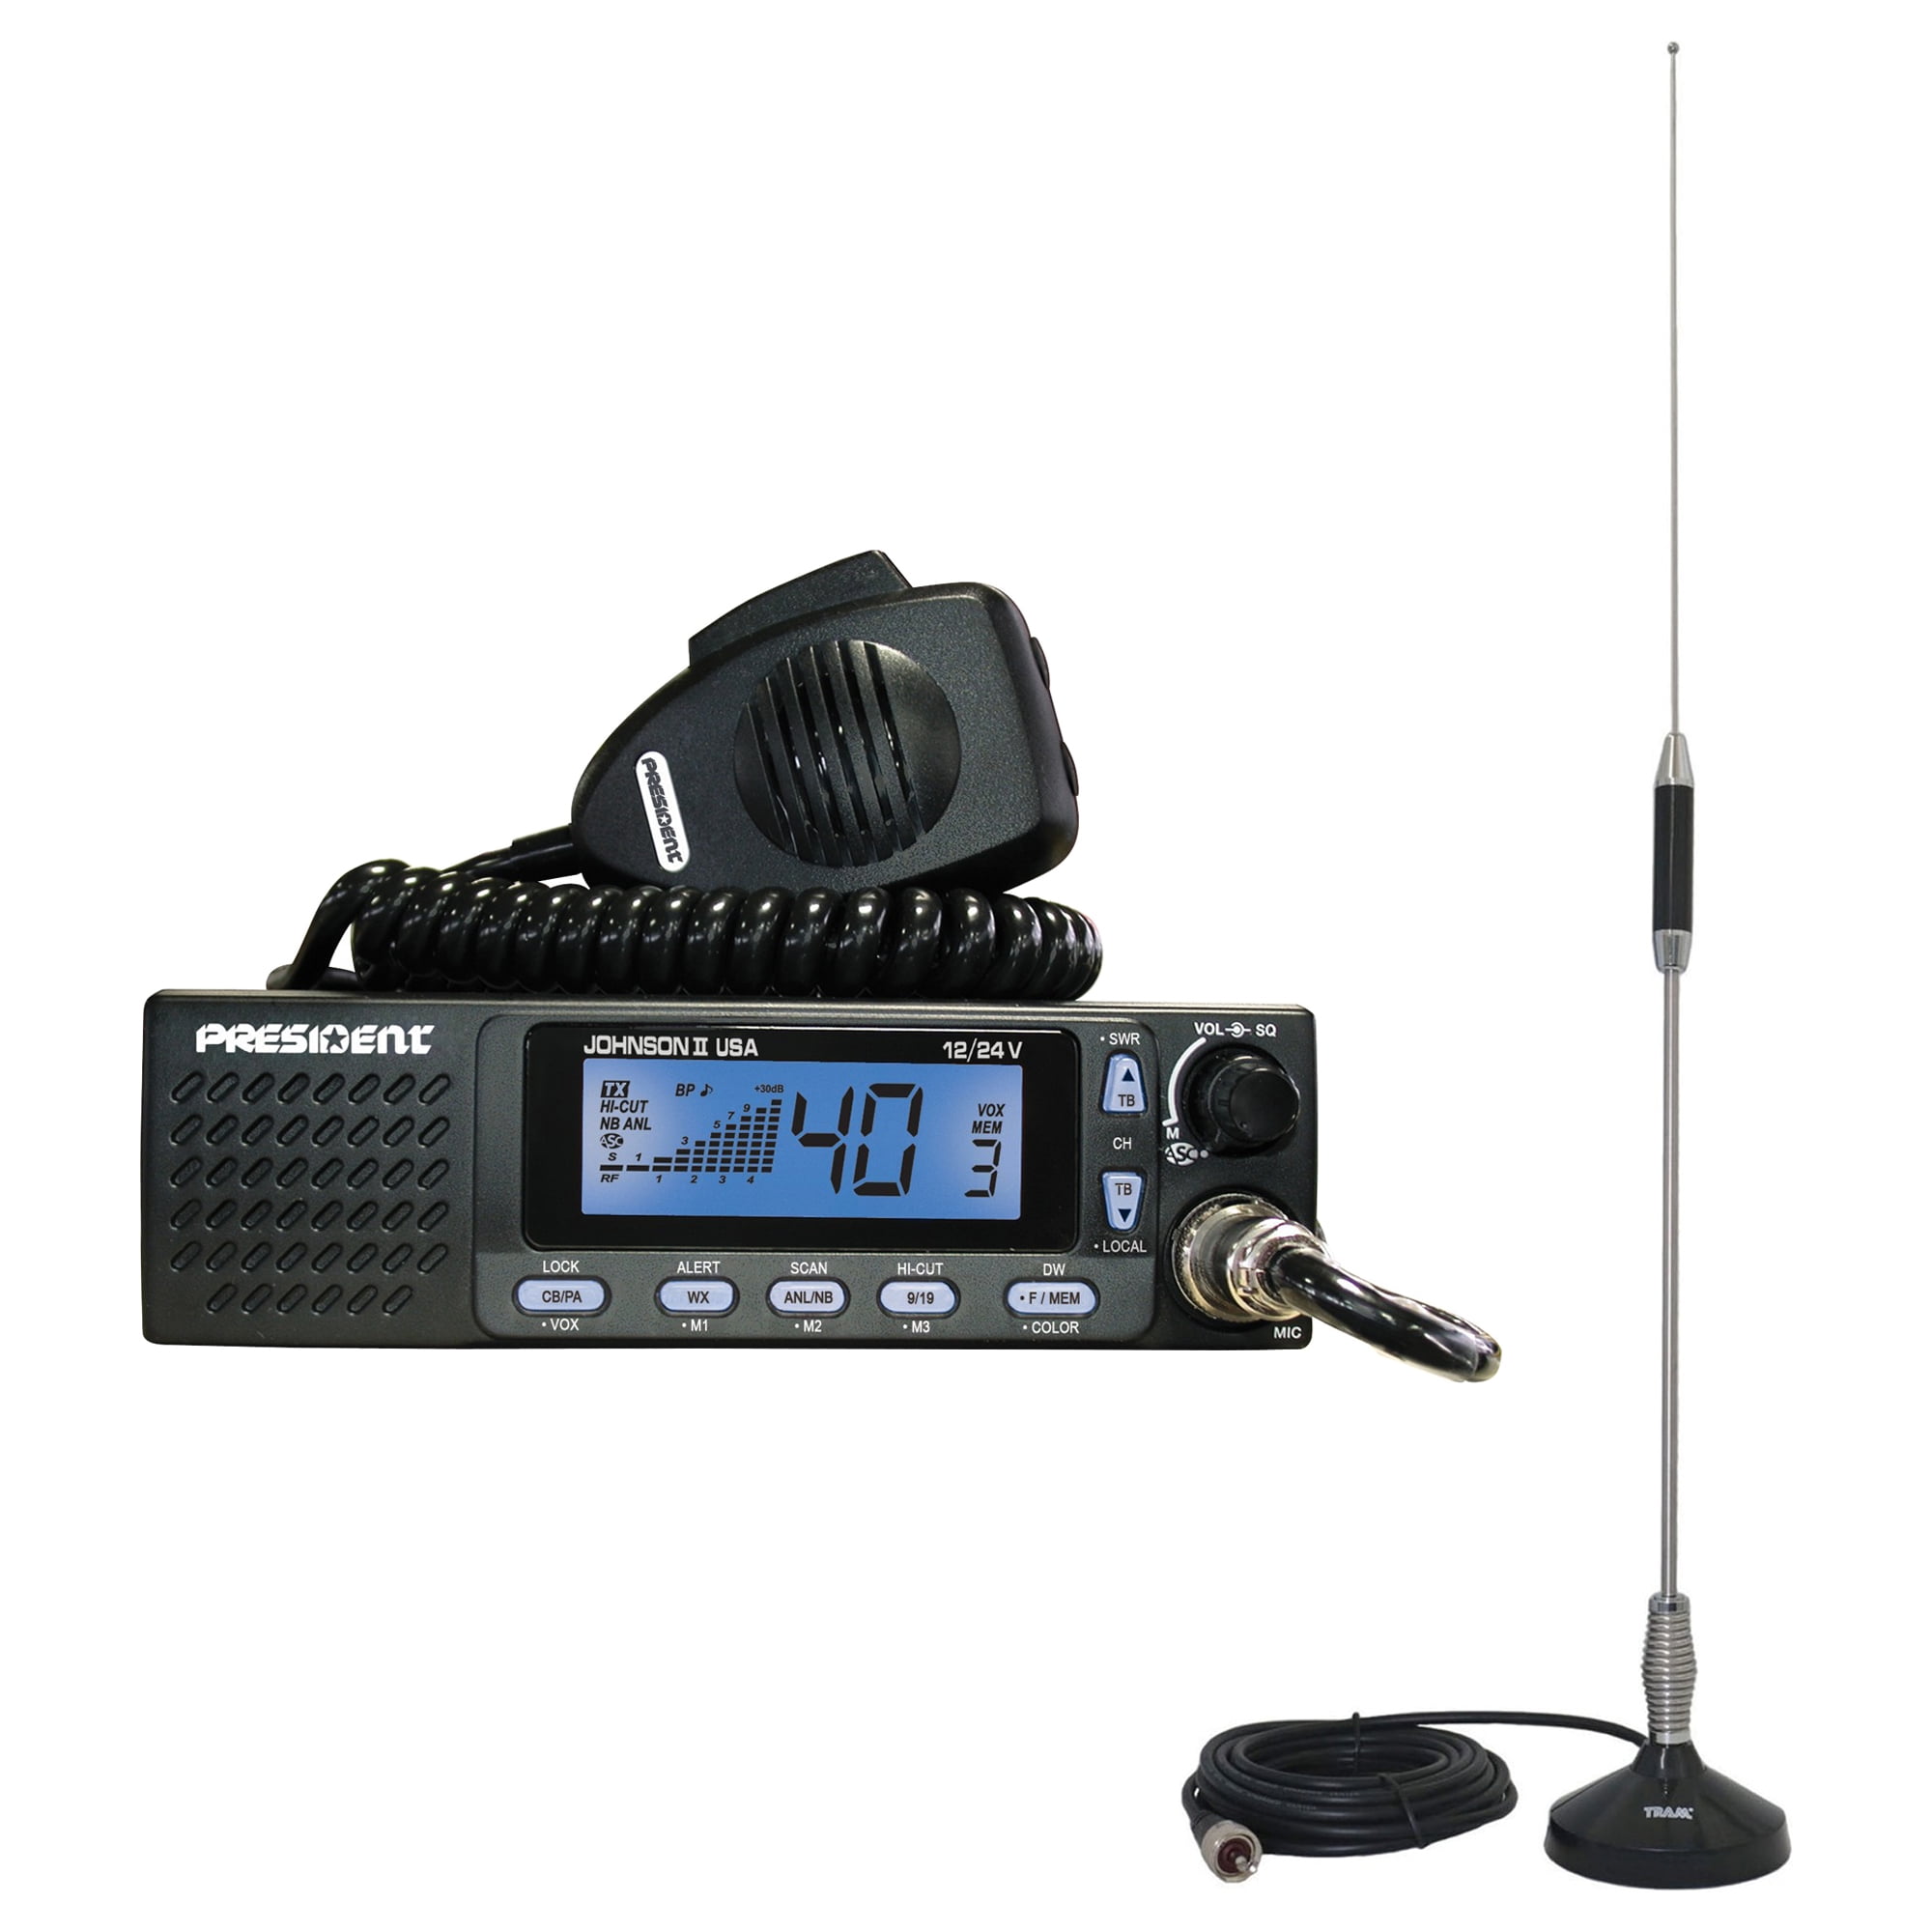 Group President Electronics Txus667 Johnson II USA 12/24V CB Radio & Tram 703-HC CB Antenna Kit